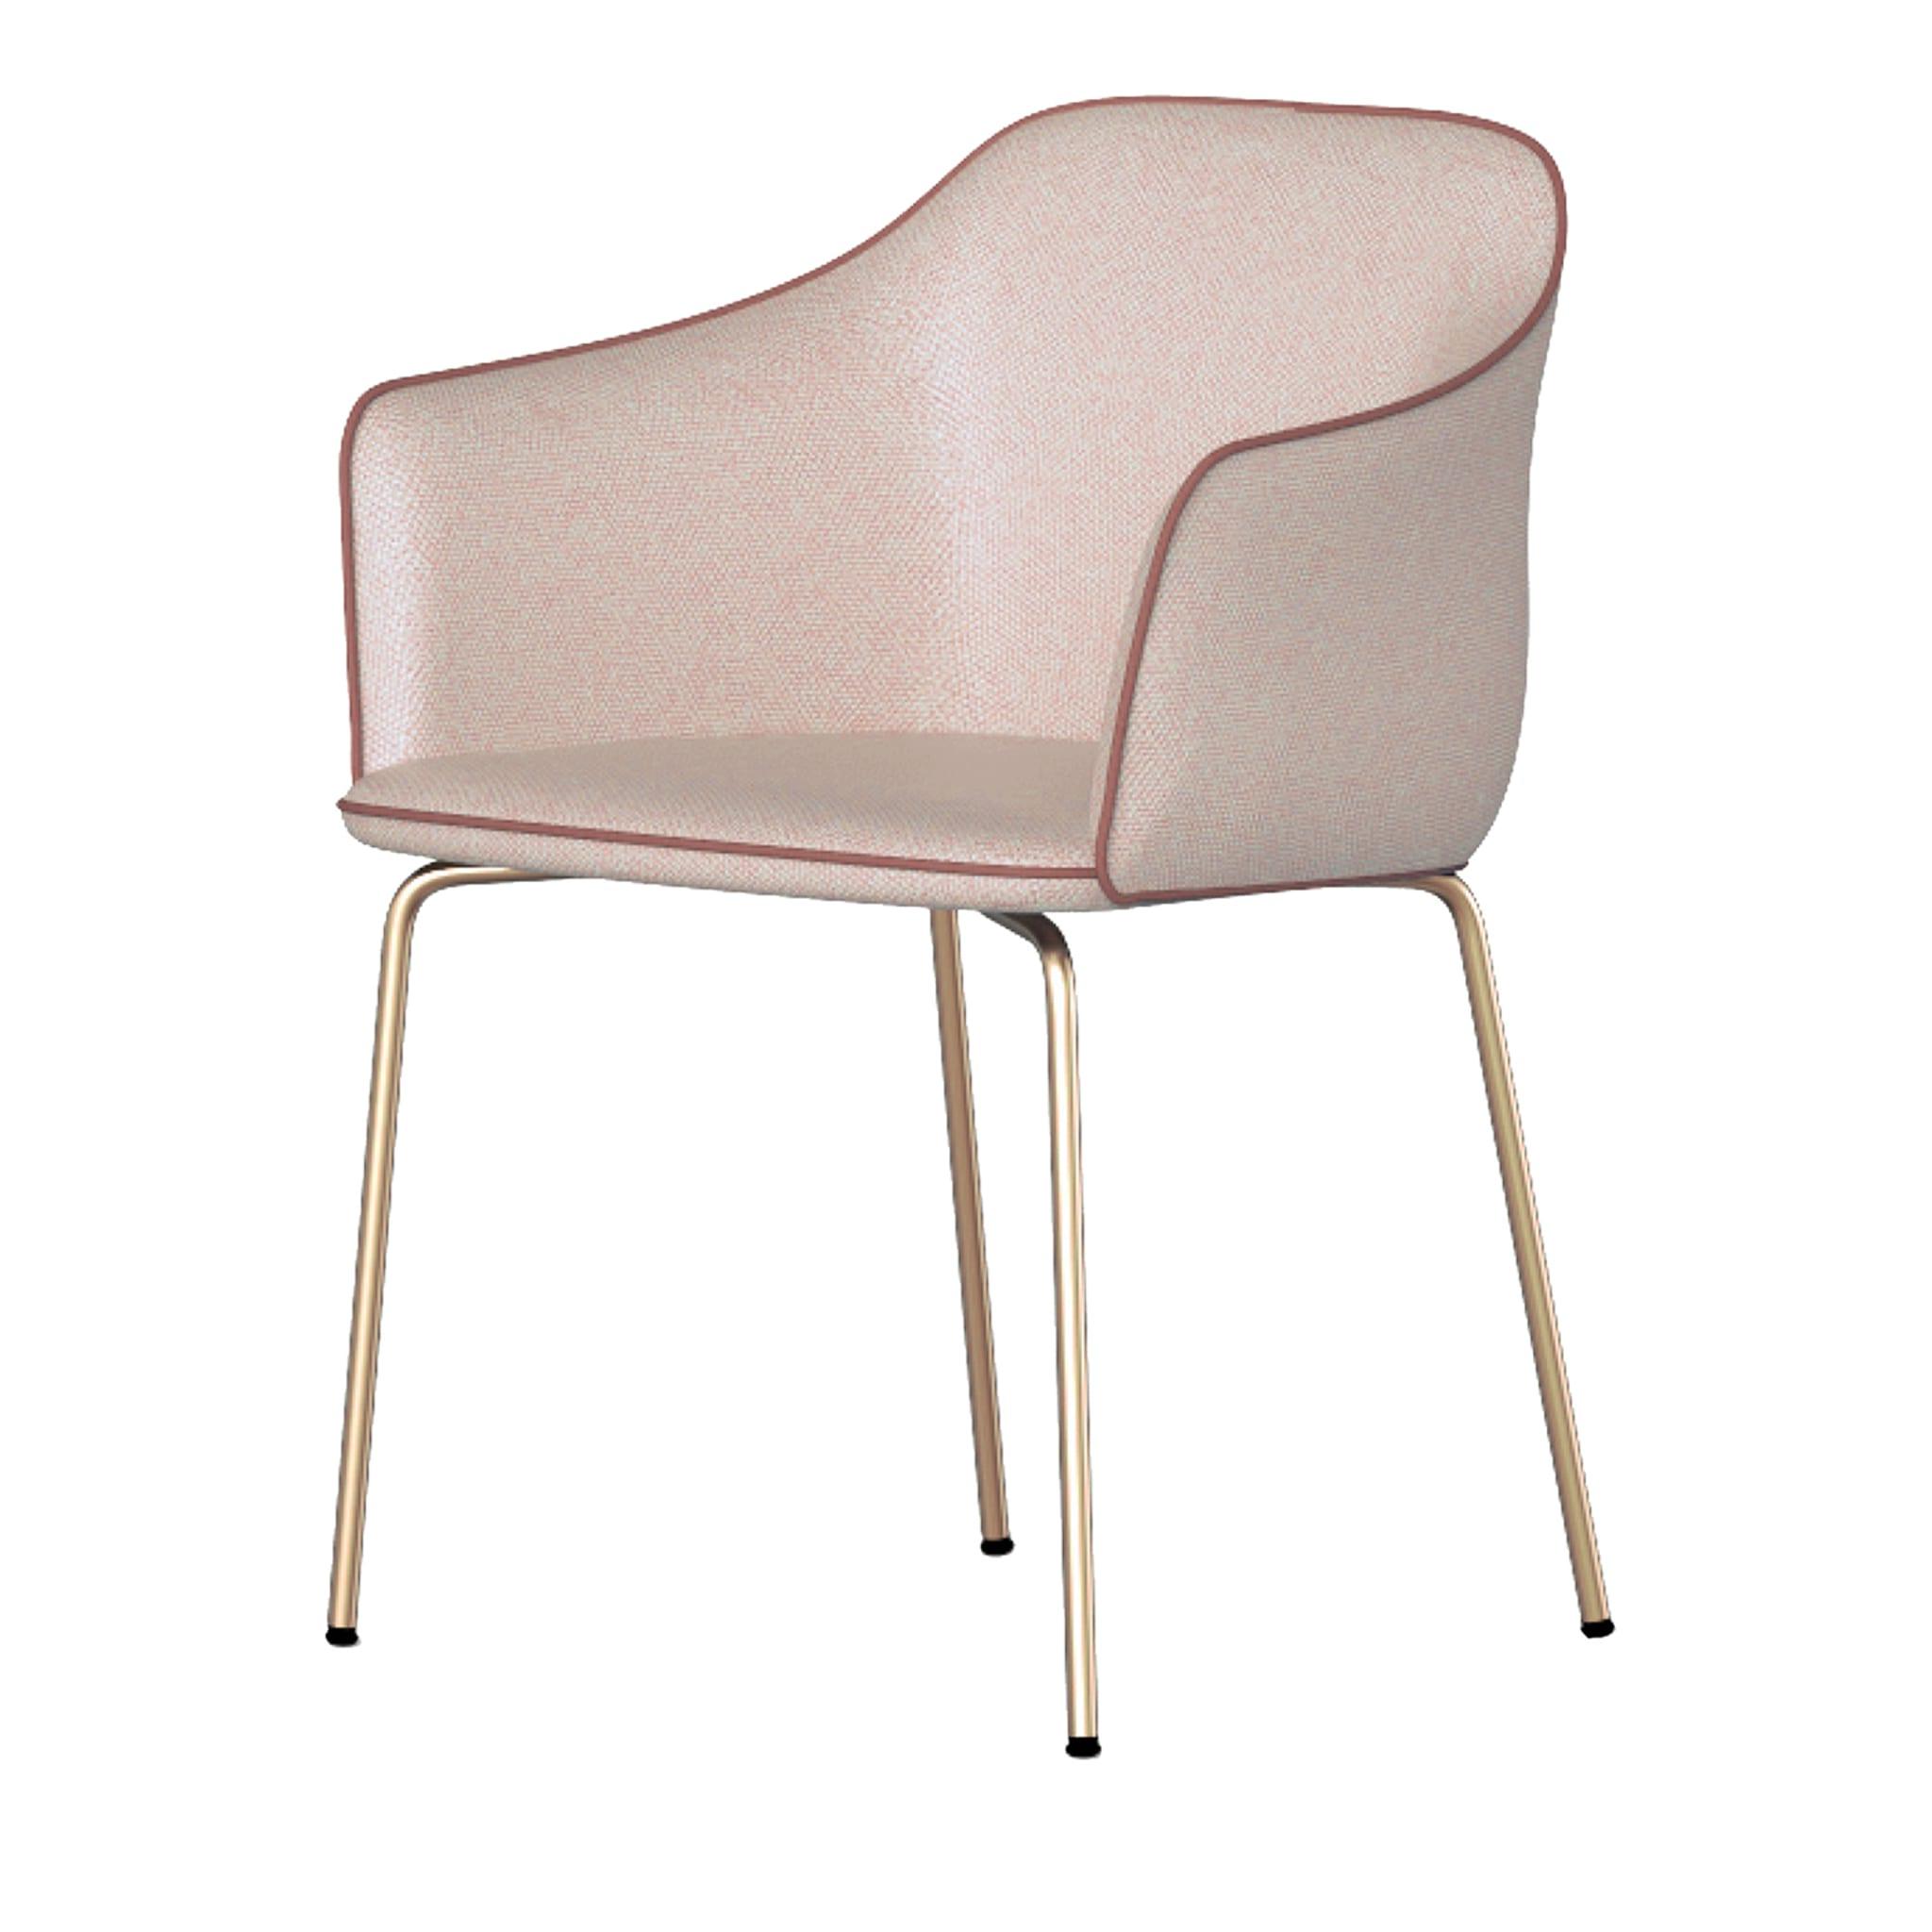 Cloe Luxury Italian Chair